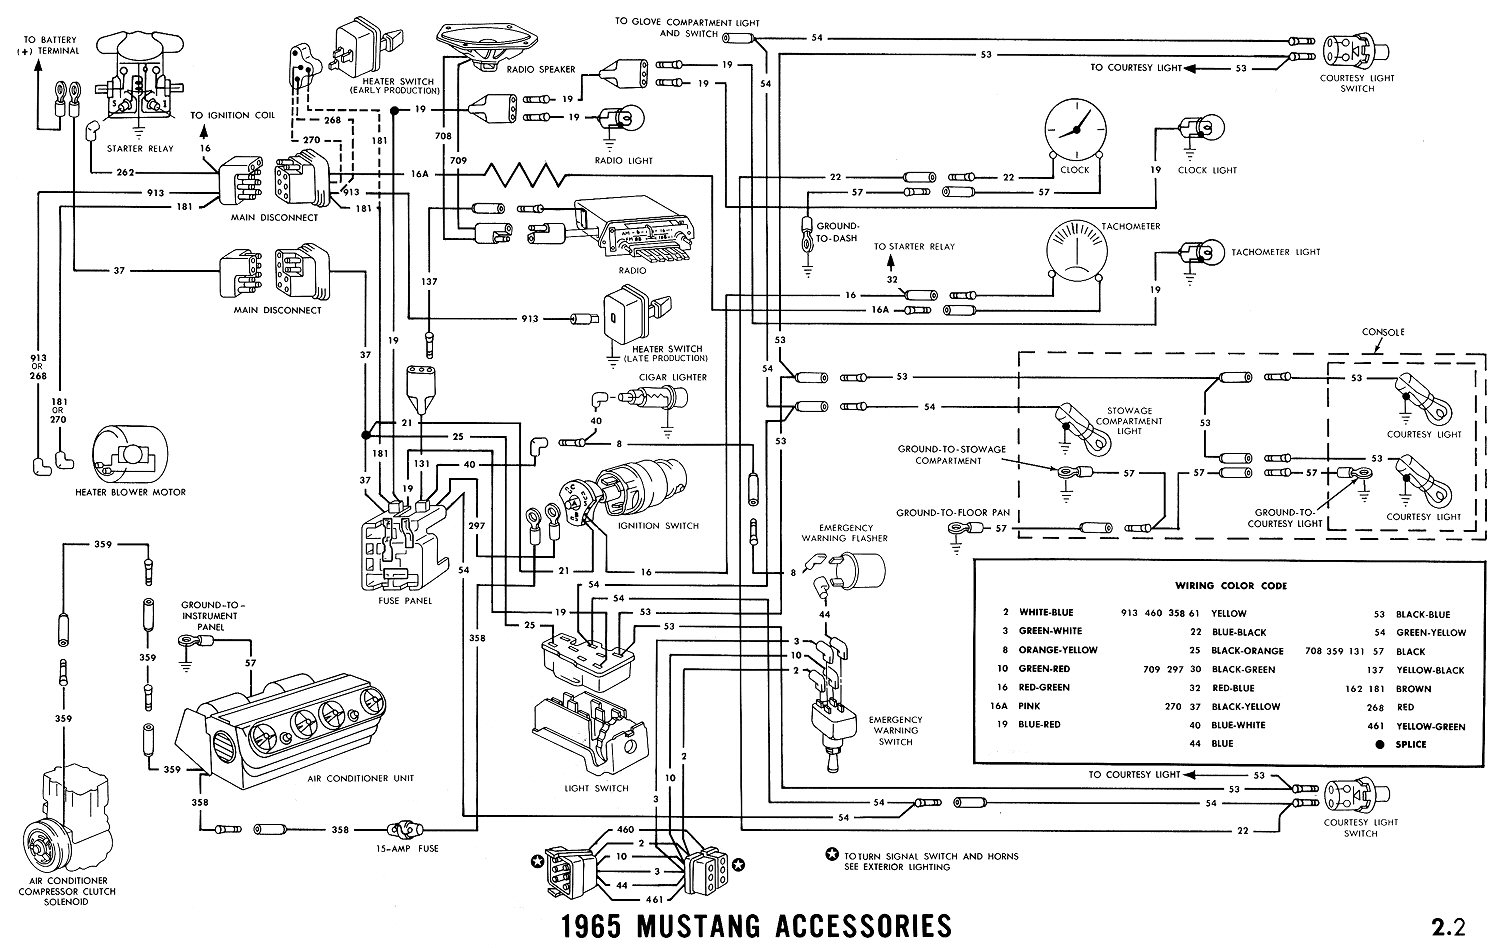 1965 Mustang Wiring Diagrams - Average Joe Restoration - Ford Wiring Harness Diagram